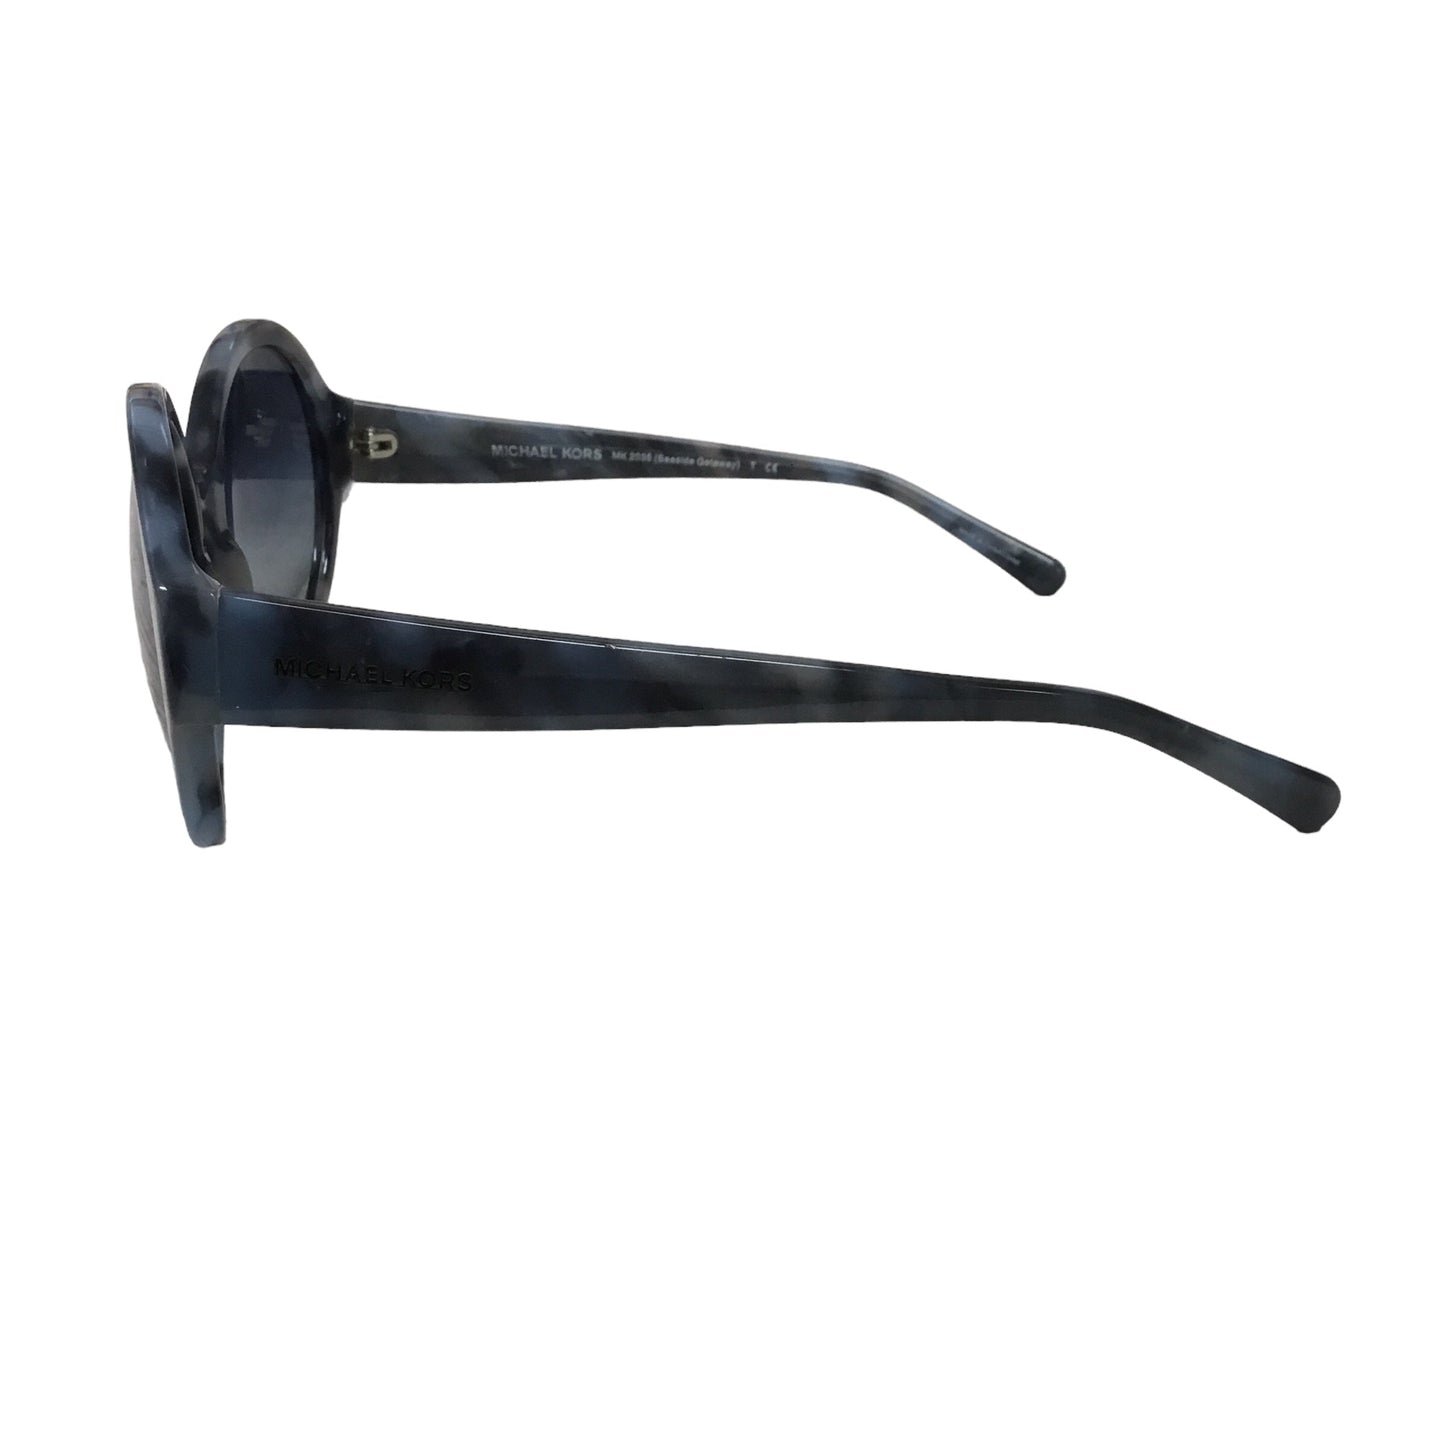 Sunglasses Designer Michael Kors, Size 01 Piece